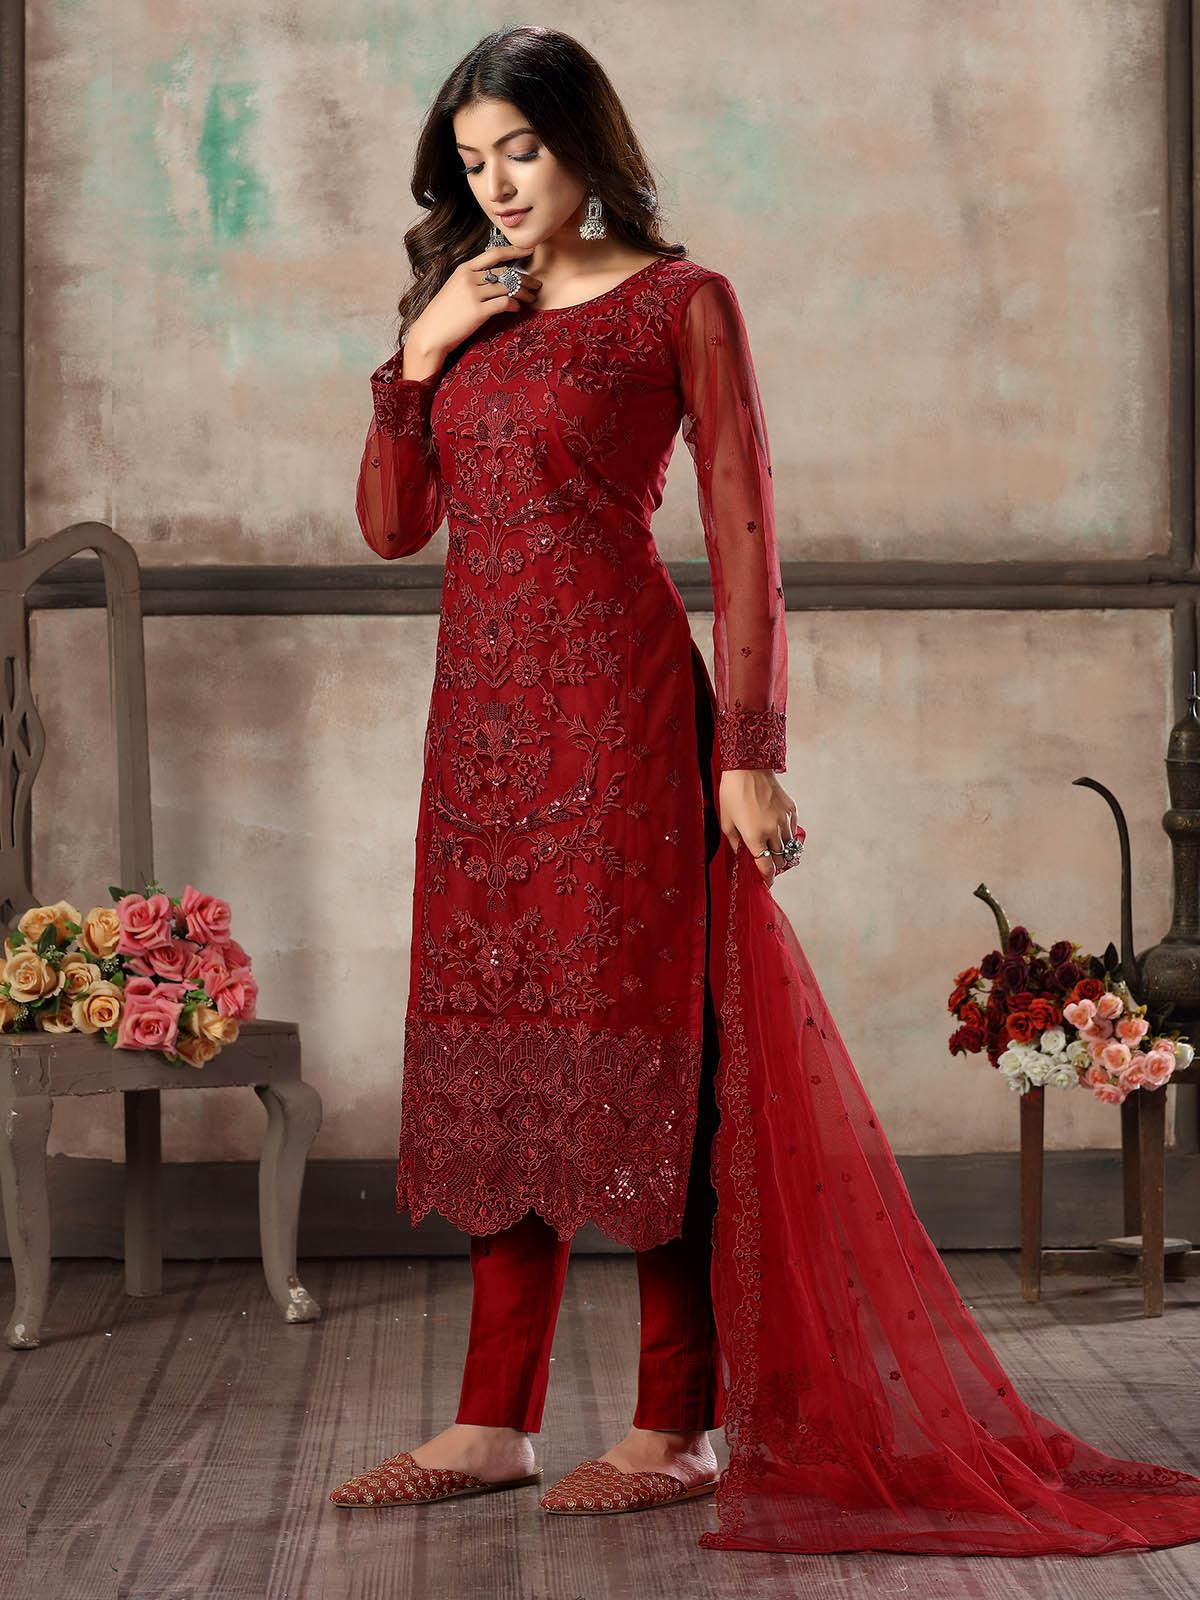 Red Colour Dress Design Red Color Combination Suits Design Latest Red  Punjabi Suit Design 2021 - YouTube